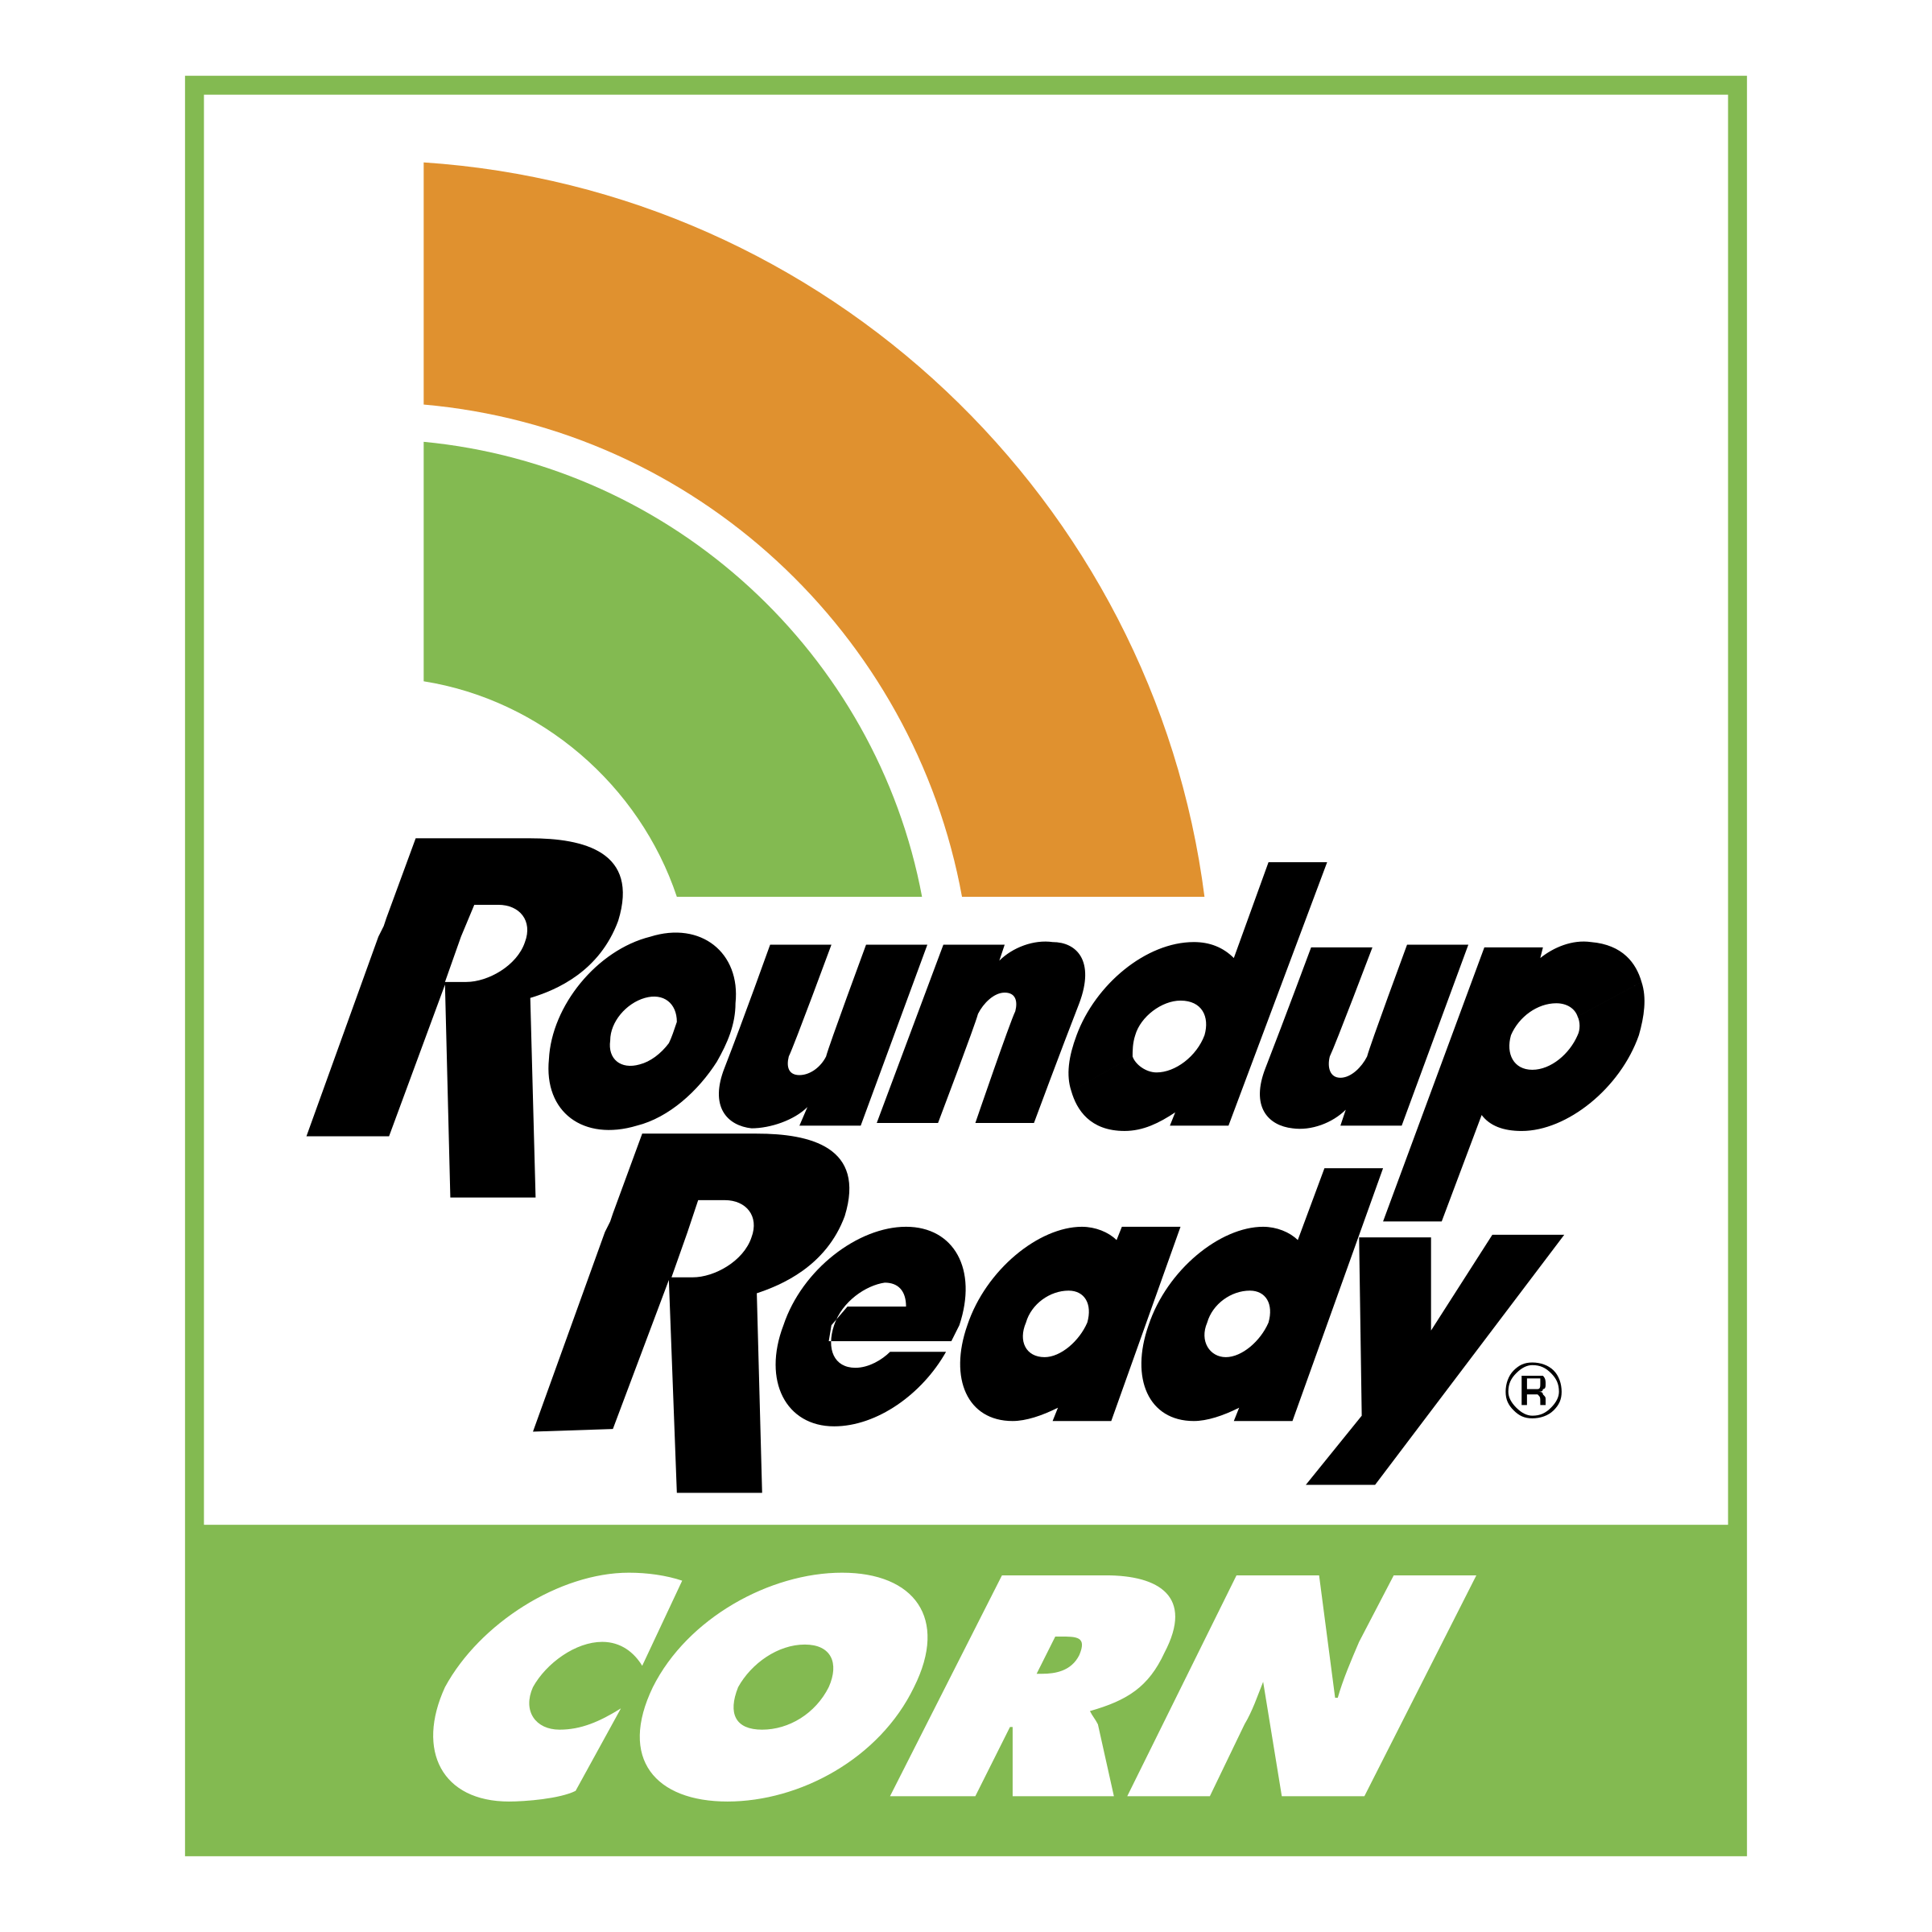 Roundup Logo - Roundup Ready Logo PNG Transparent & SVG Vector - Freebie Supply